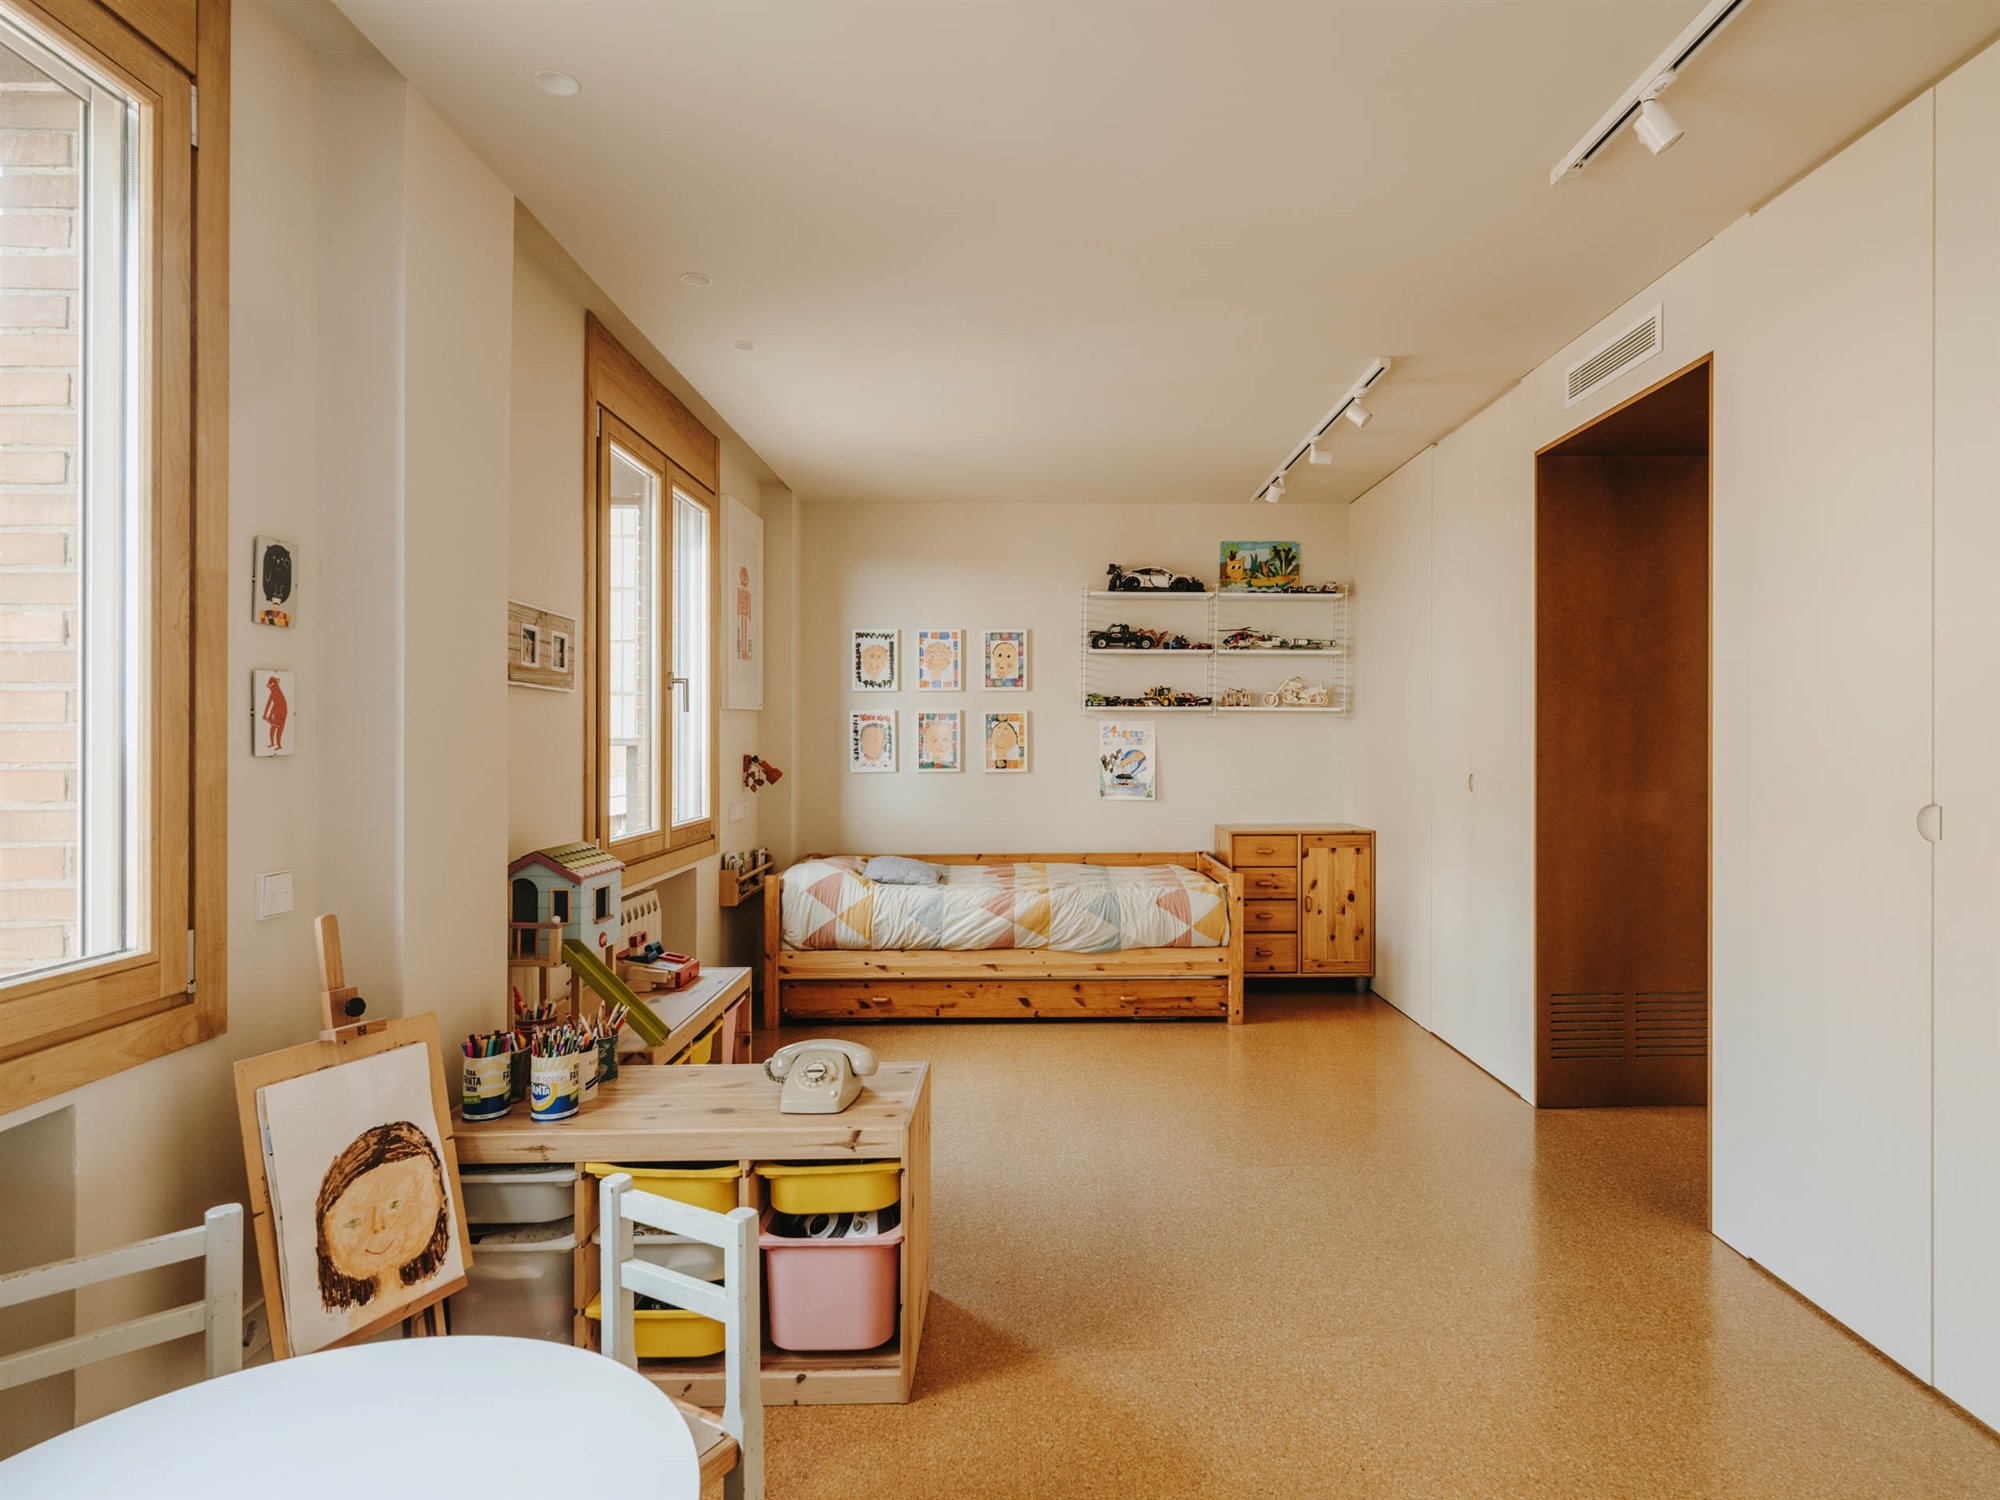 Dormitorio infantil atico barcelona